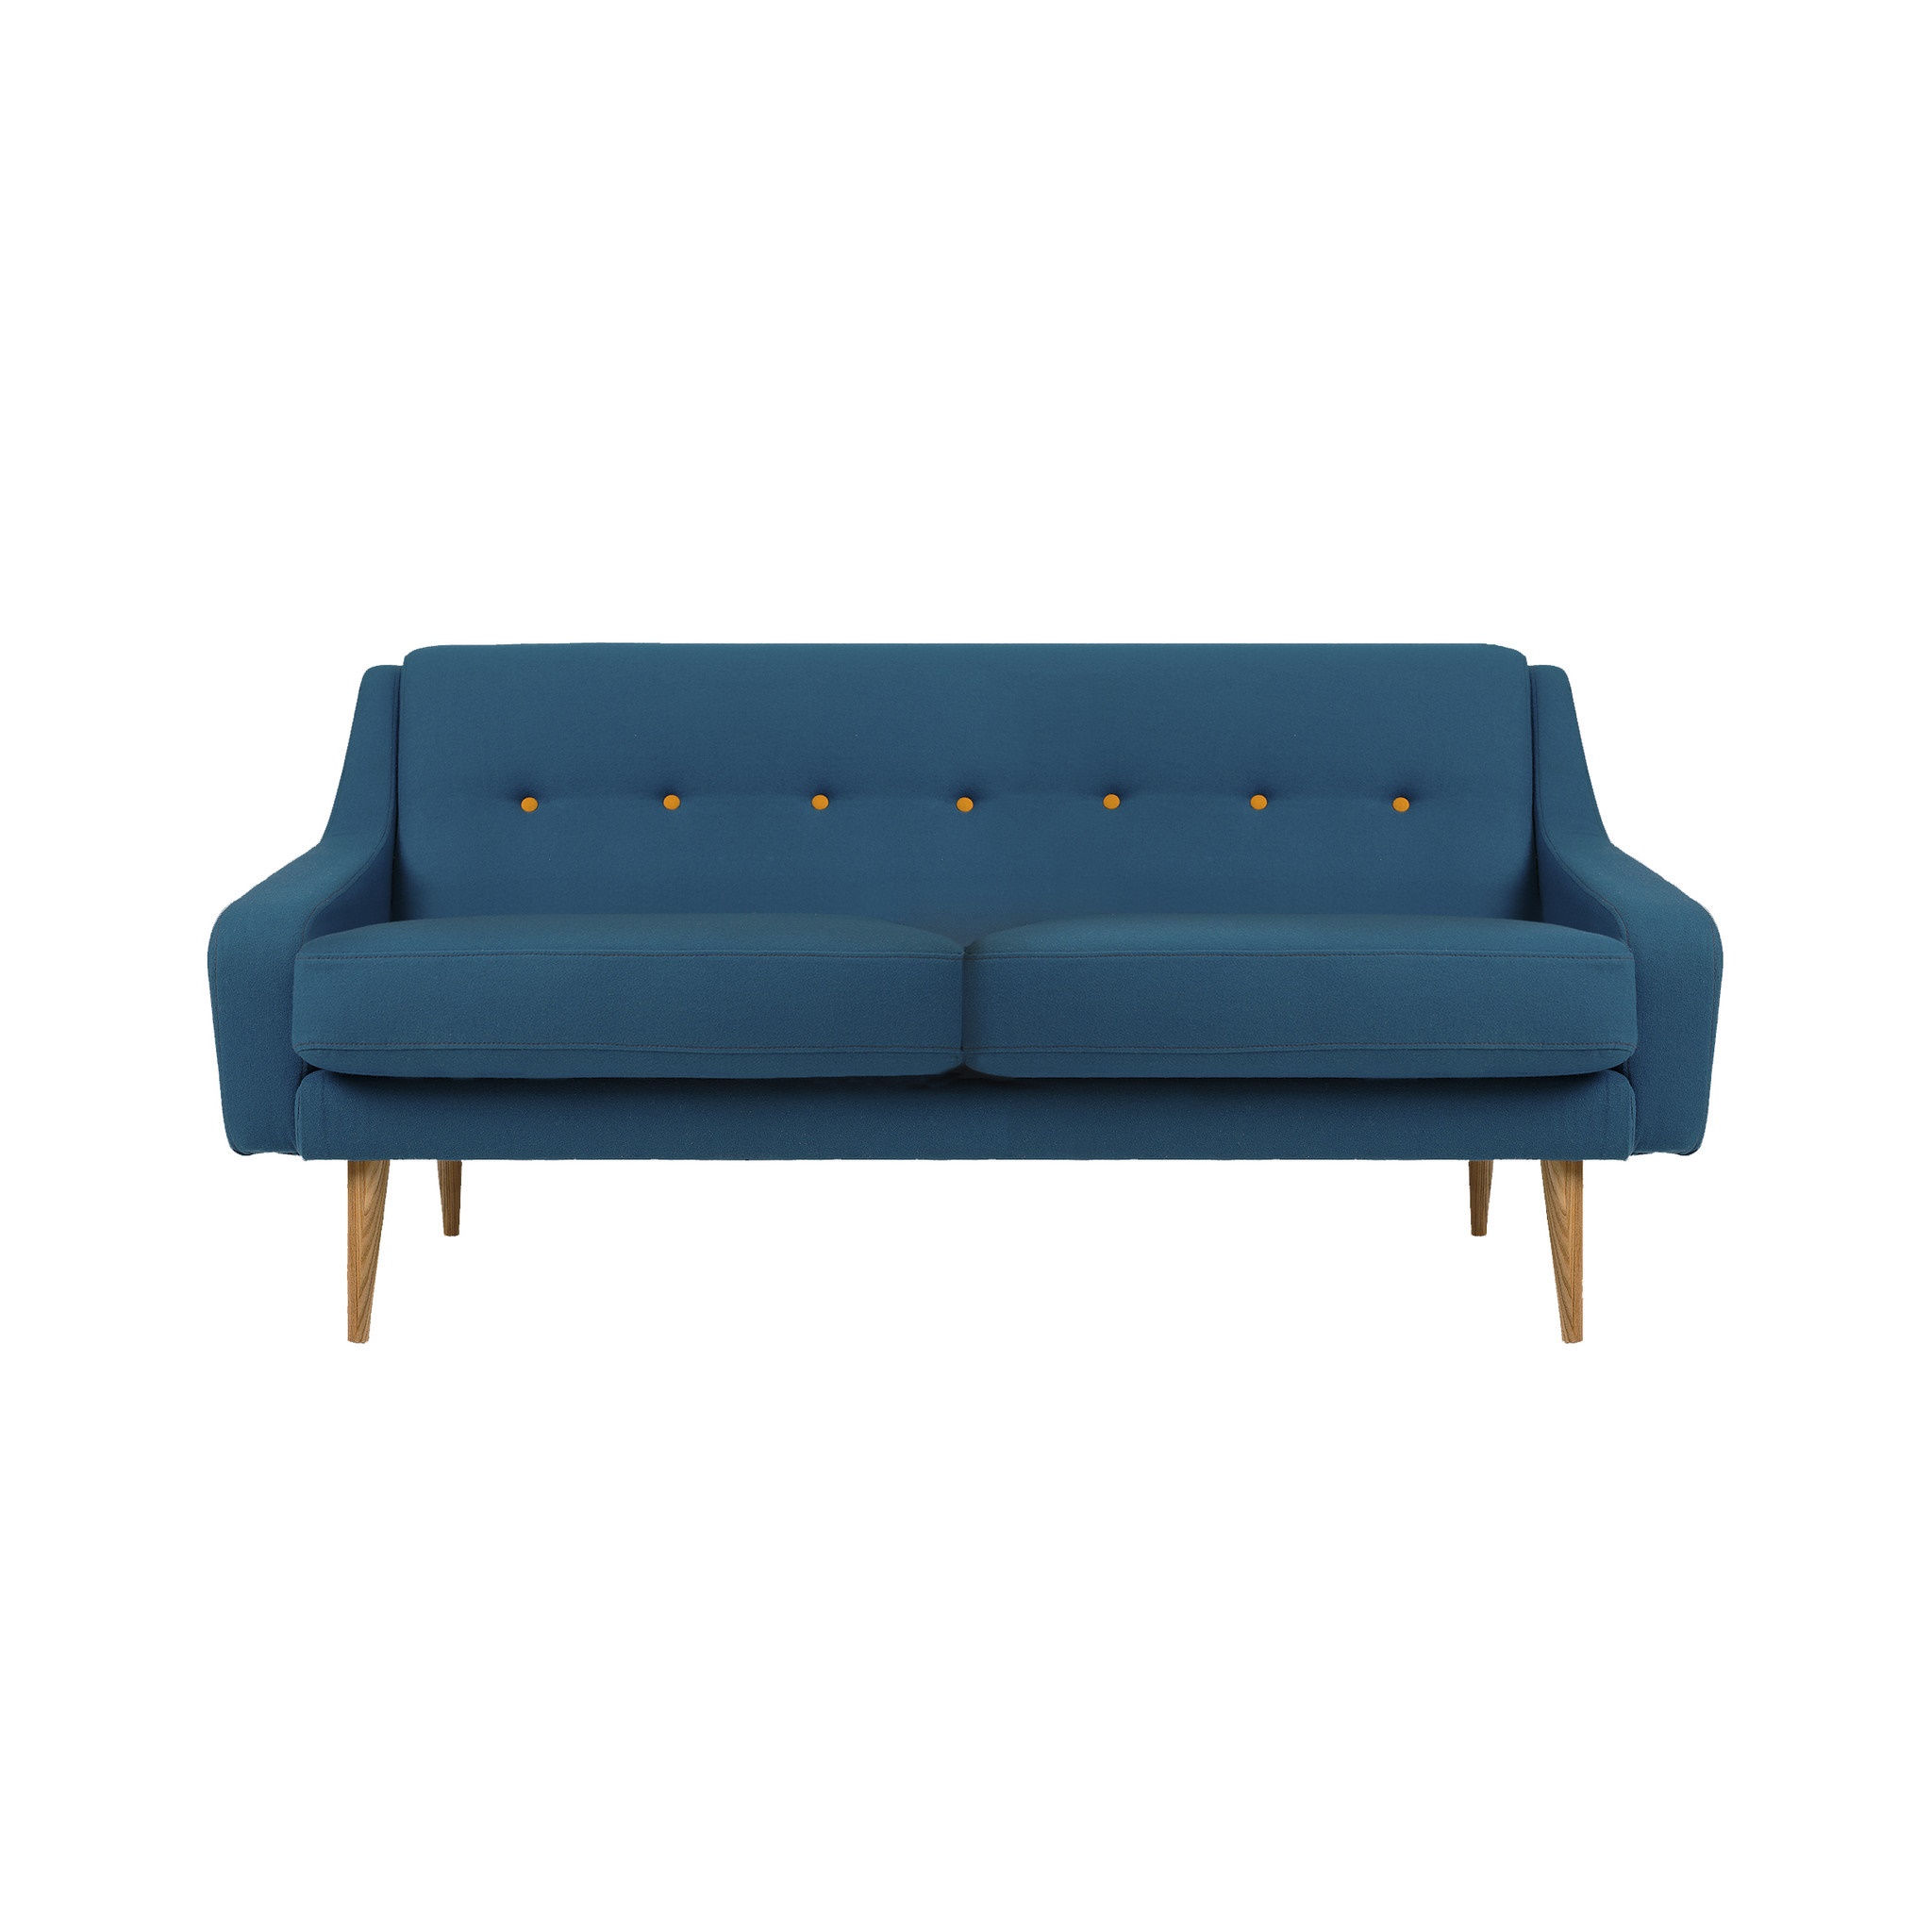 Трехместный диван одри m blue (vysotkahome) синий 185x85x85 см.